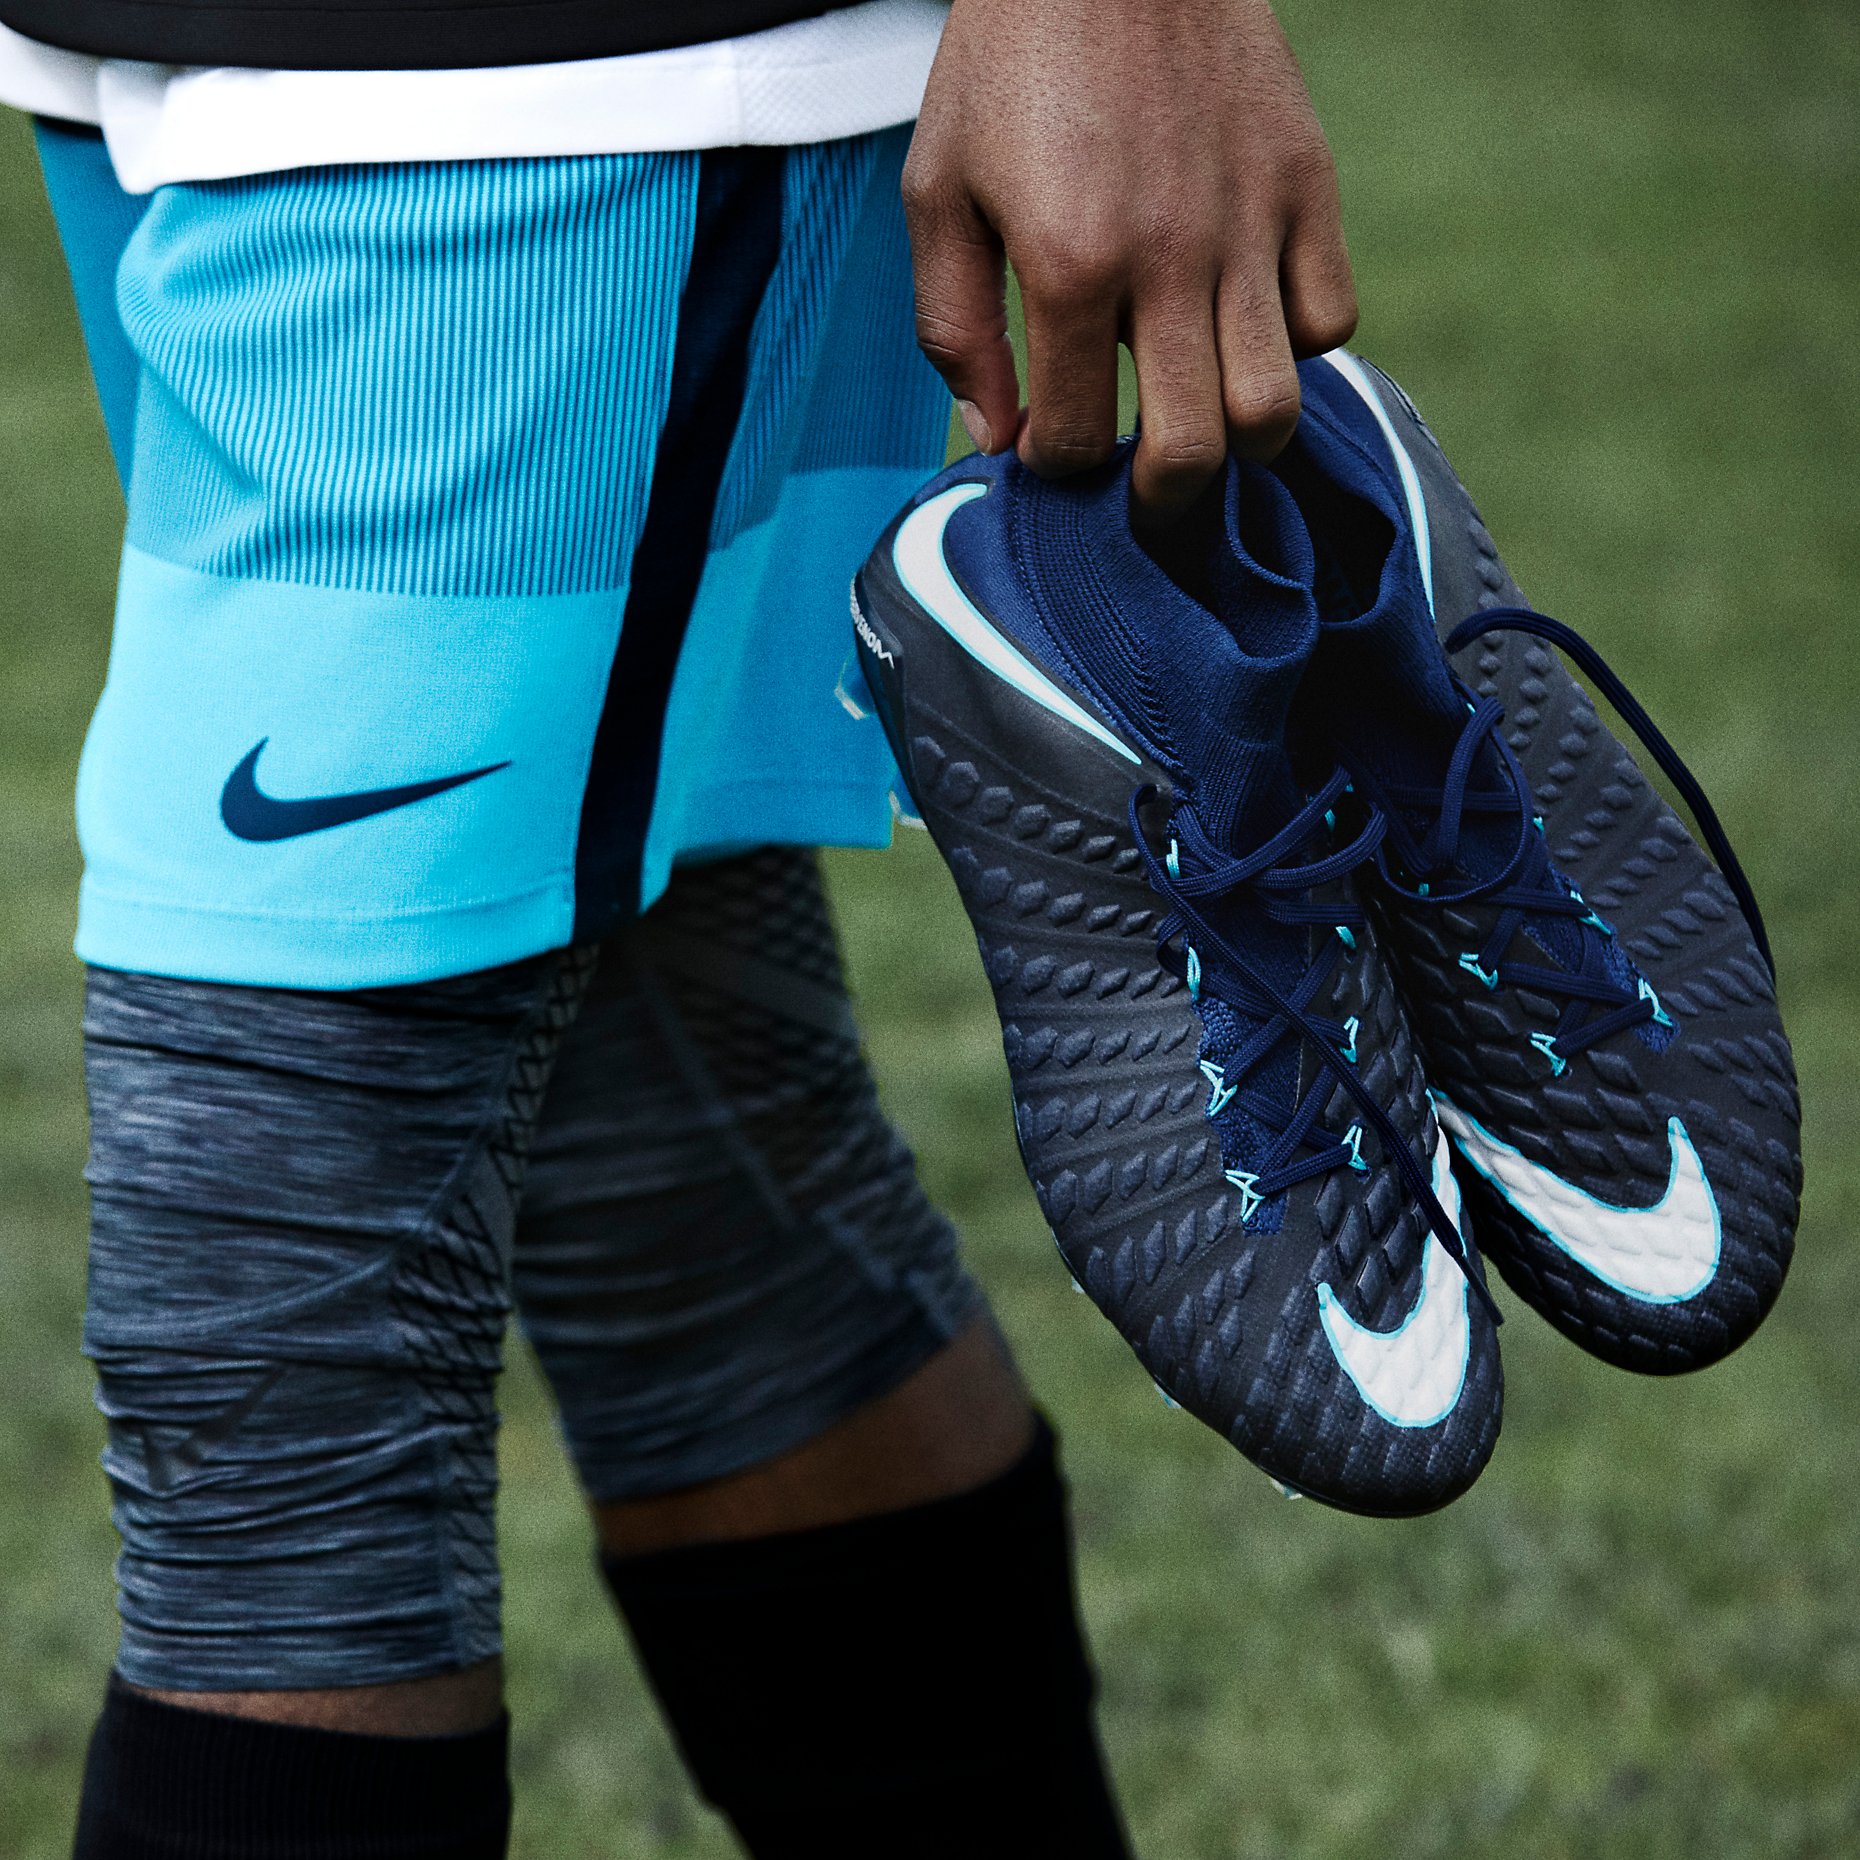 Nike Hypervenom 3 DF FG & Ice Obsidian / Gamma Blue / Glacier Blue / White - Football Shirt - Latest Football Kit News and More